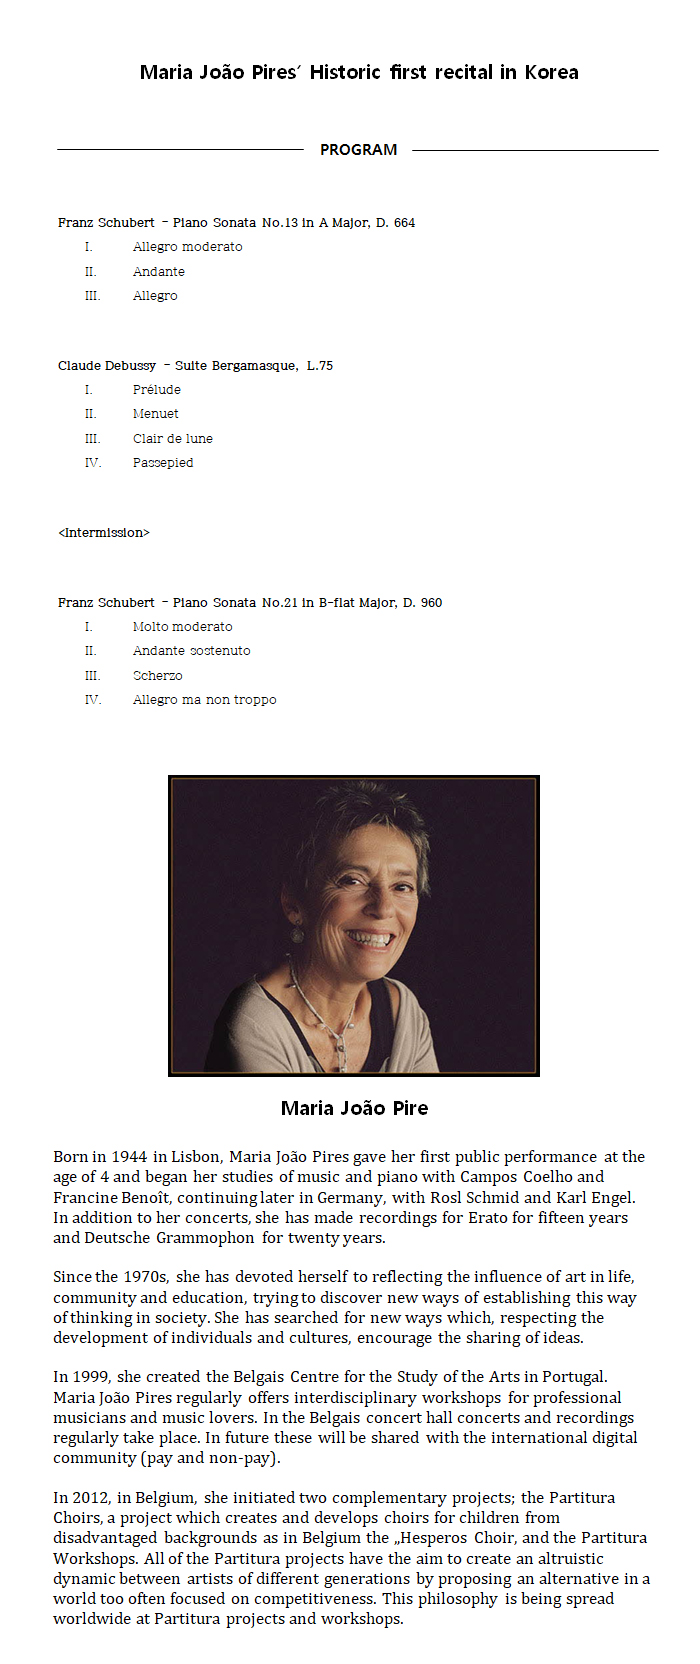 Maria Joao Pires Piano Recital